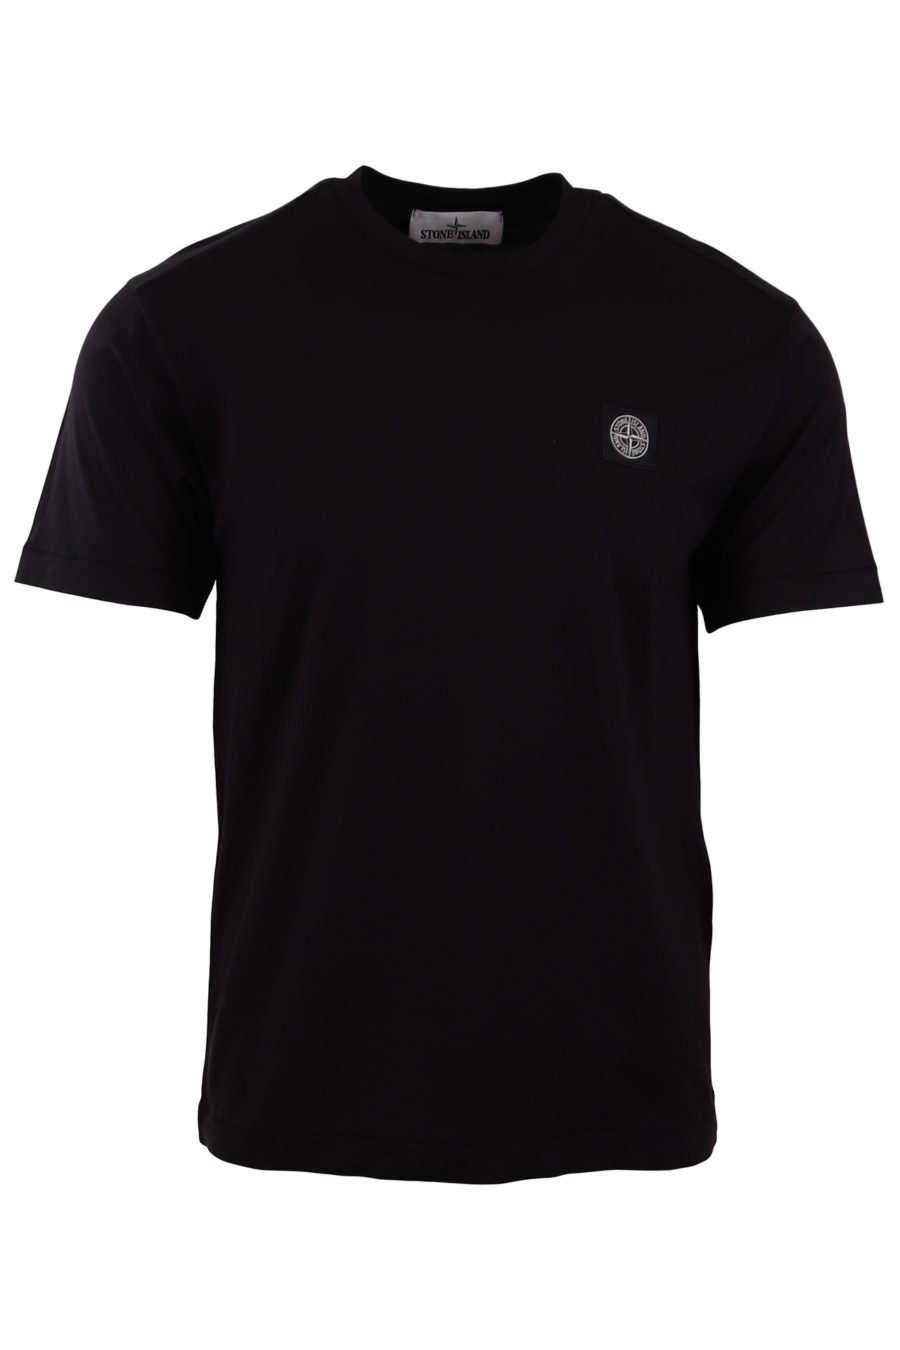 Stone Island T-shirt noir avec patch logo - 37c9665dce837bfb4b296259c803760f430887e5